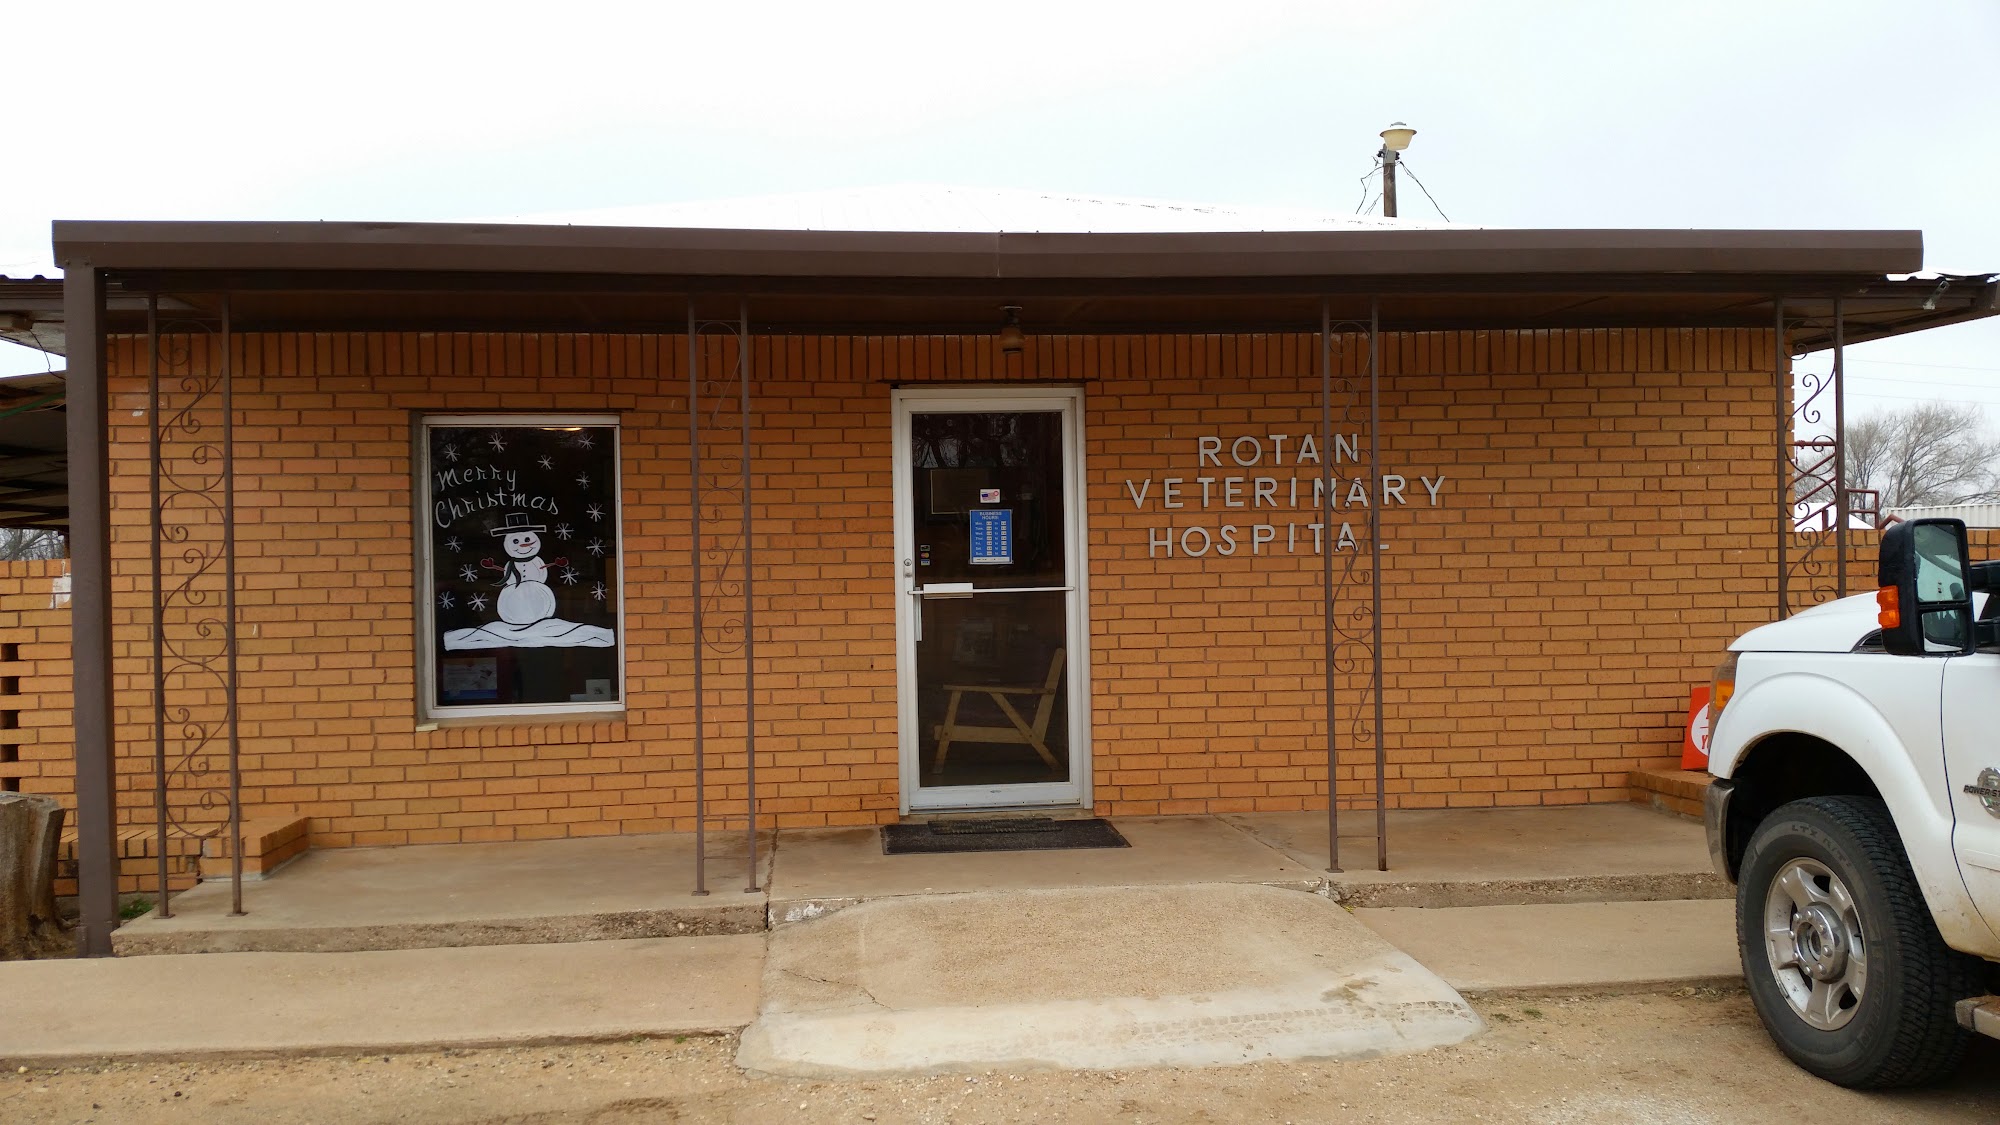 Rotan Veterinary Hospital 1301 N Cleveland Ave, Rotan Texas 79546